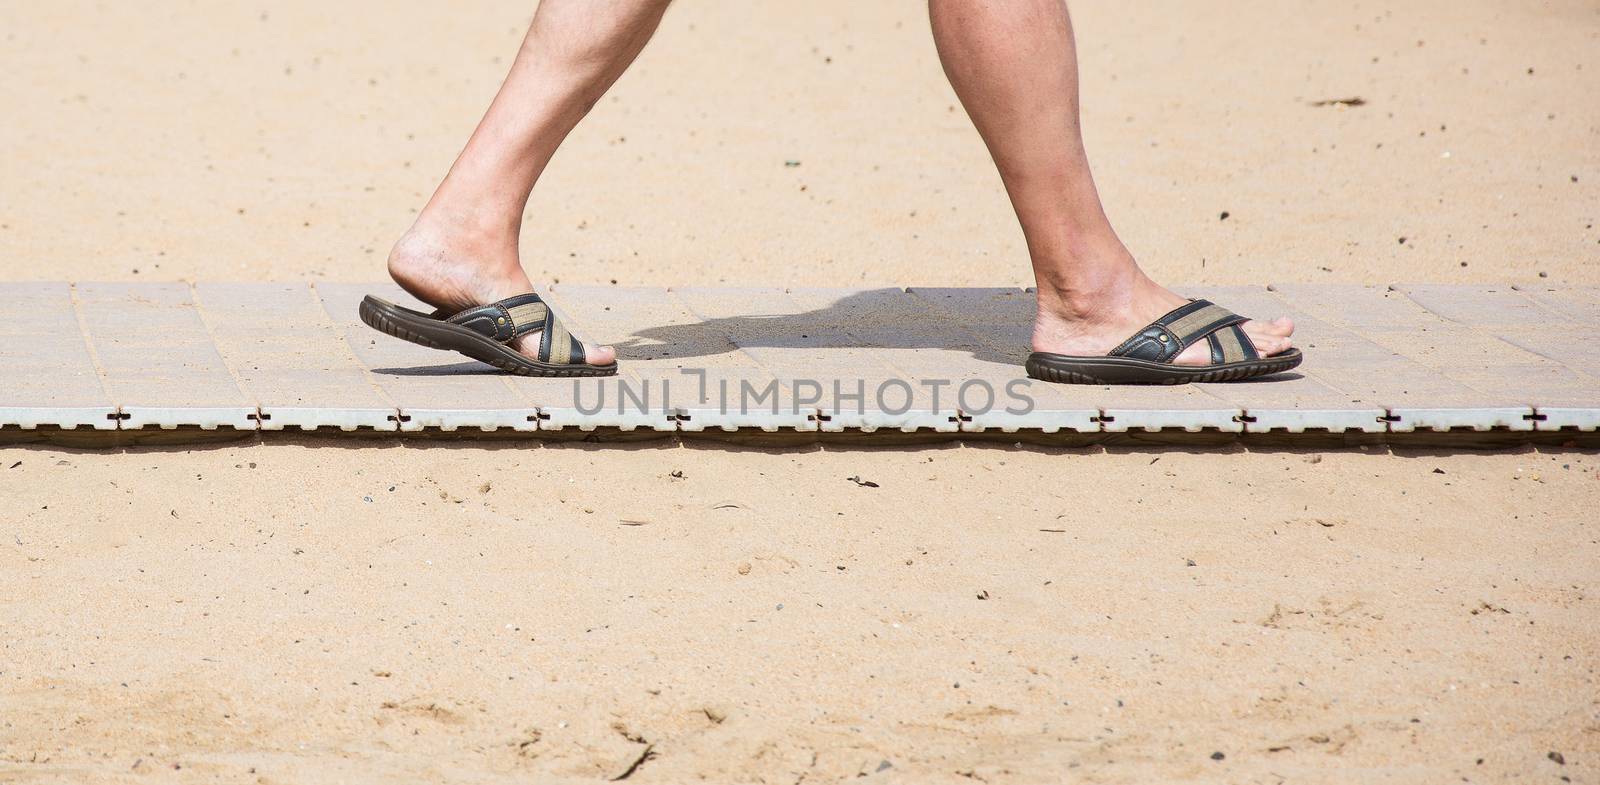 Men's feet in summer slates on the beach sand track by Grommik